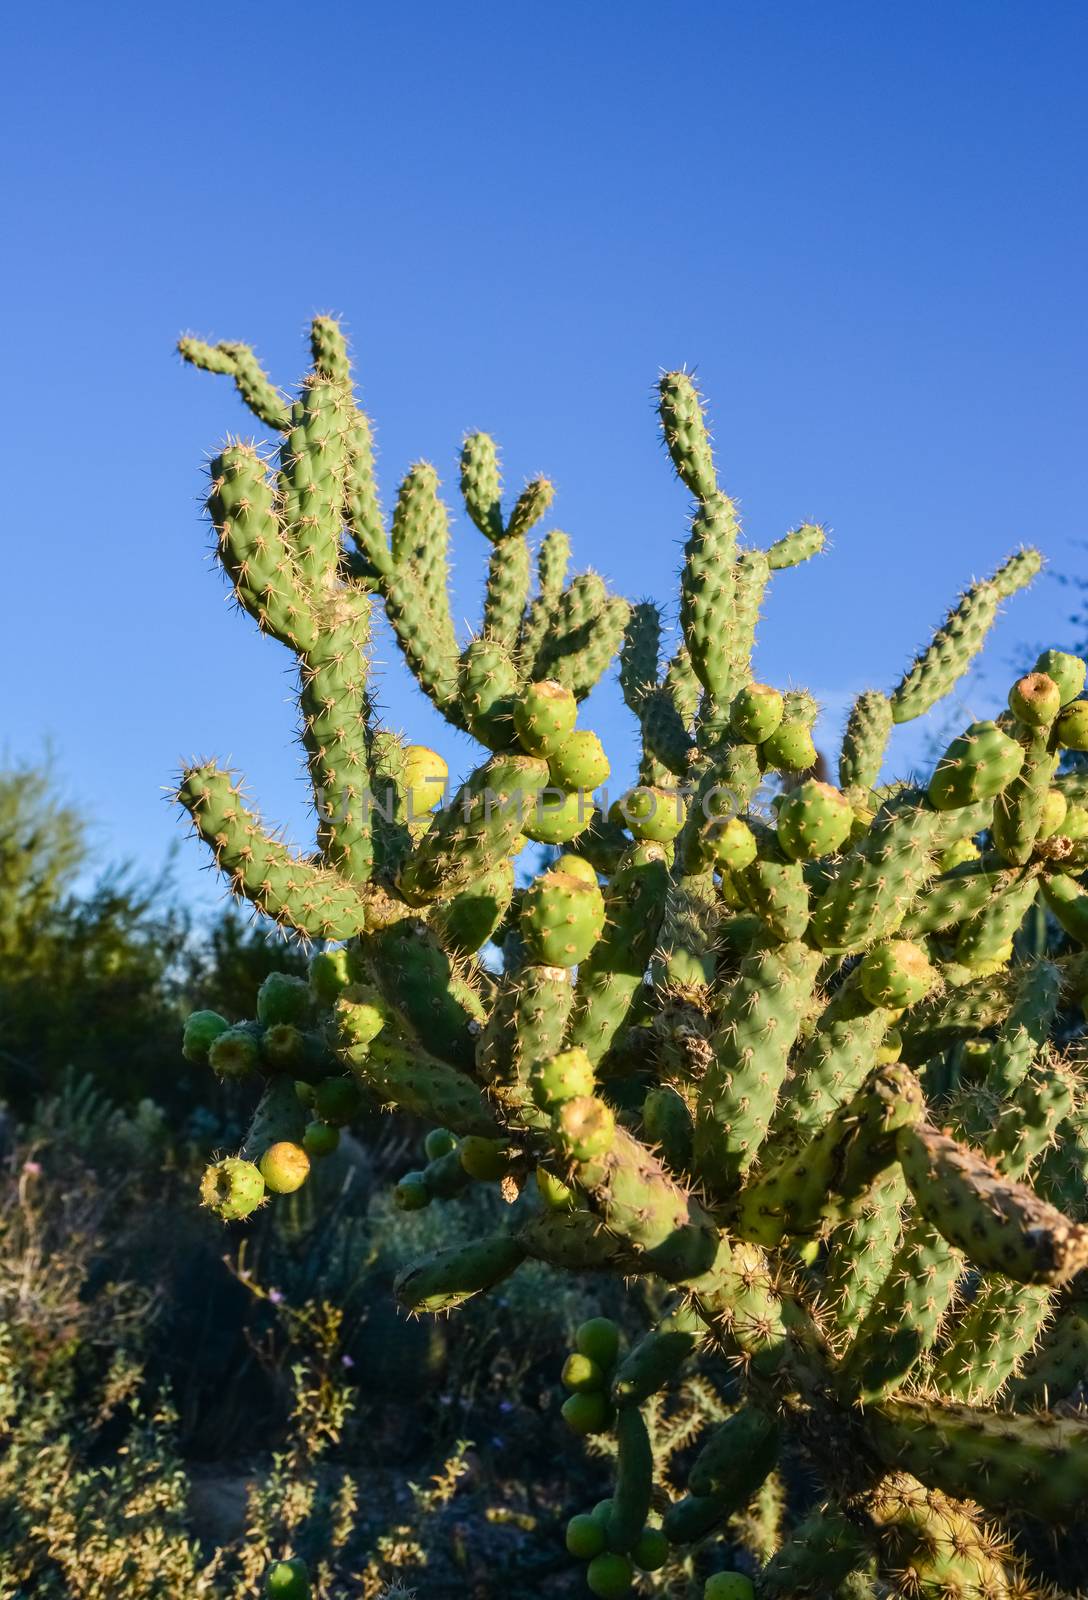 Cactus. Cane Chola Cylindropuntia on a background of blue sky. Arizona, USA